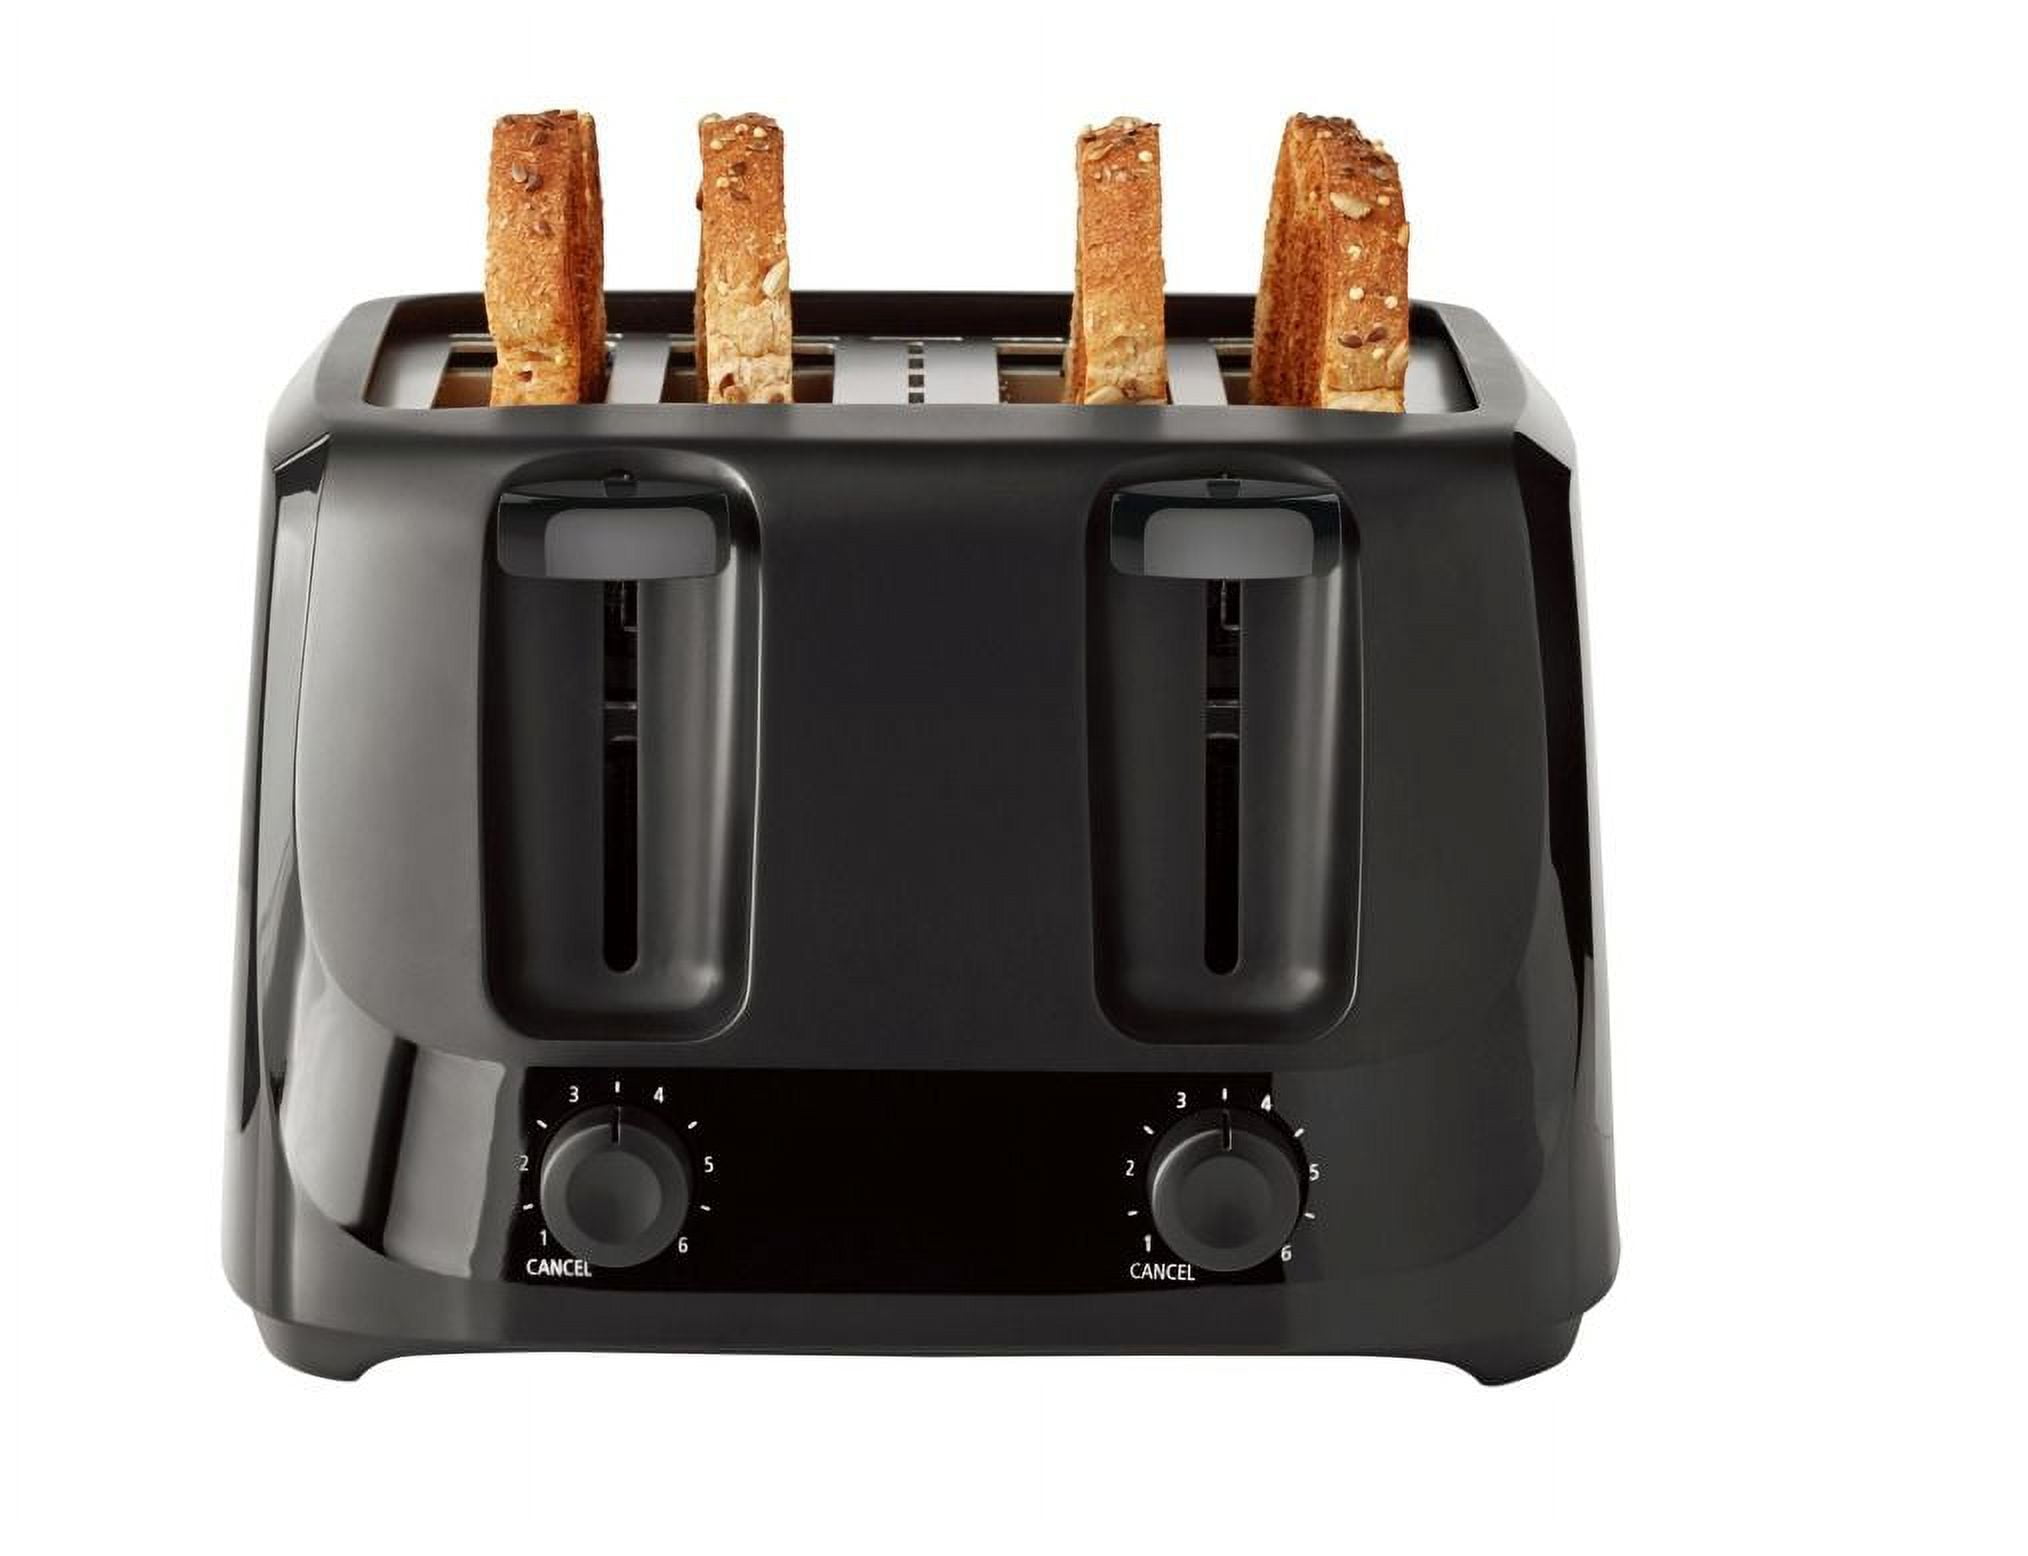 Hamilton Beach 2 Slice Toaster, Extra-Wide Slots, Chrome-Plated Lever,  Black, 22217